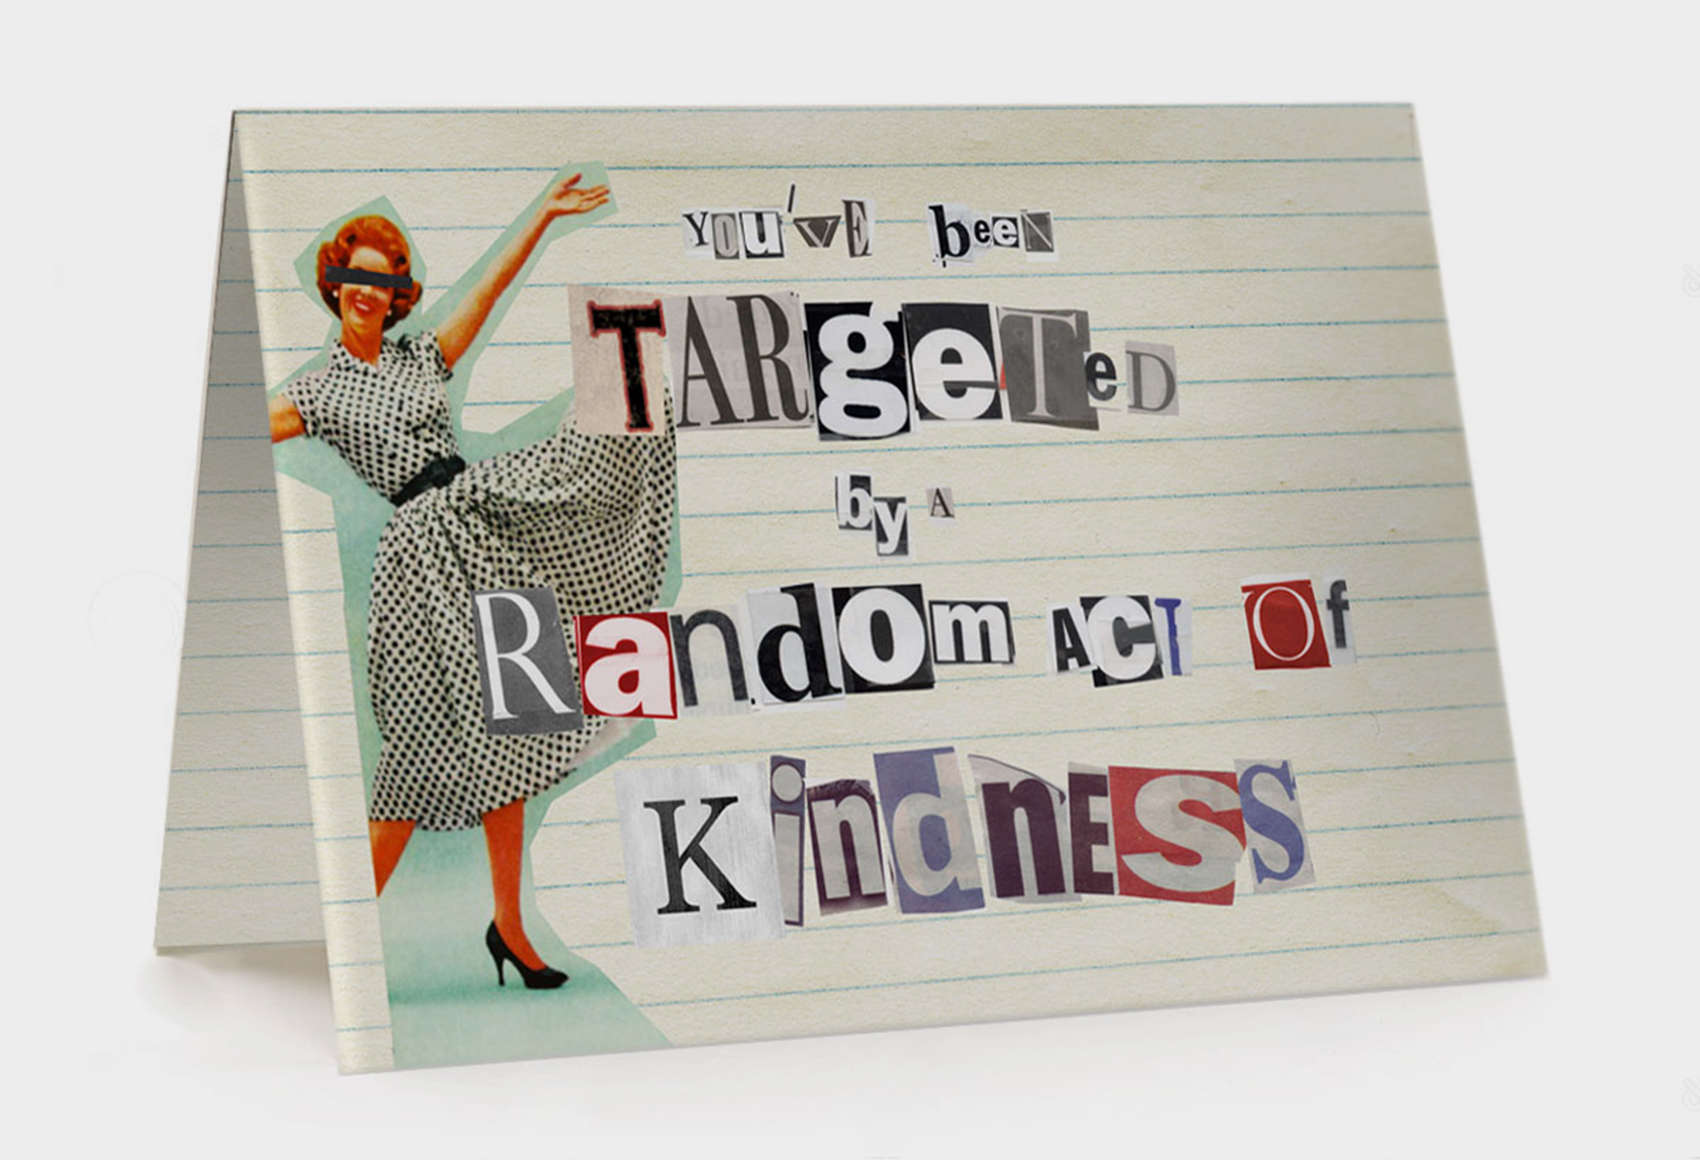 The card inside the Random Act of Kindness Kit.